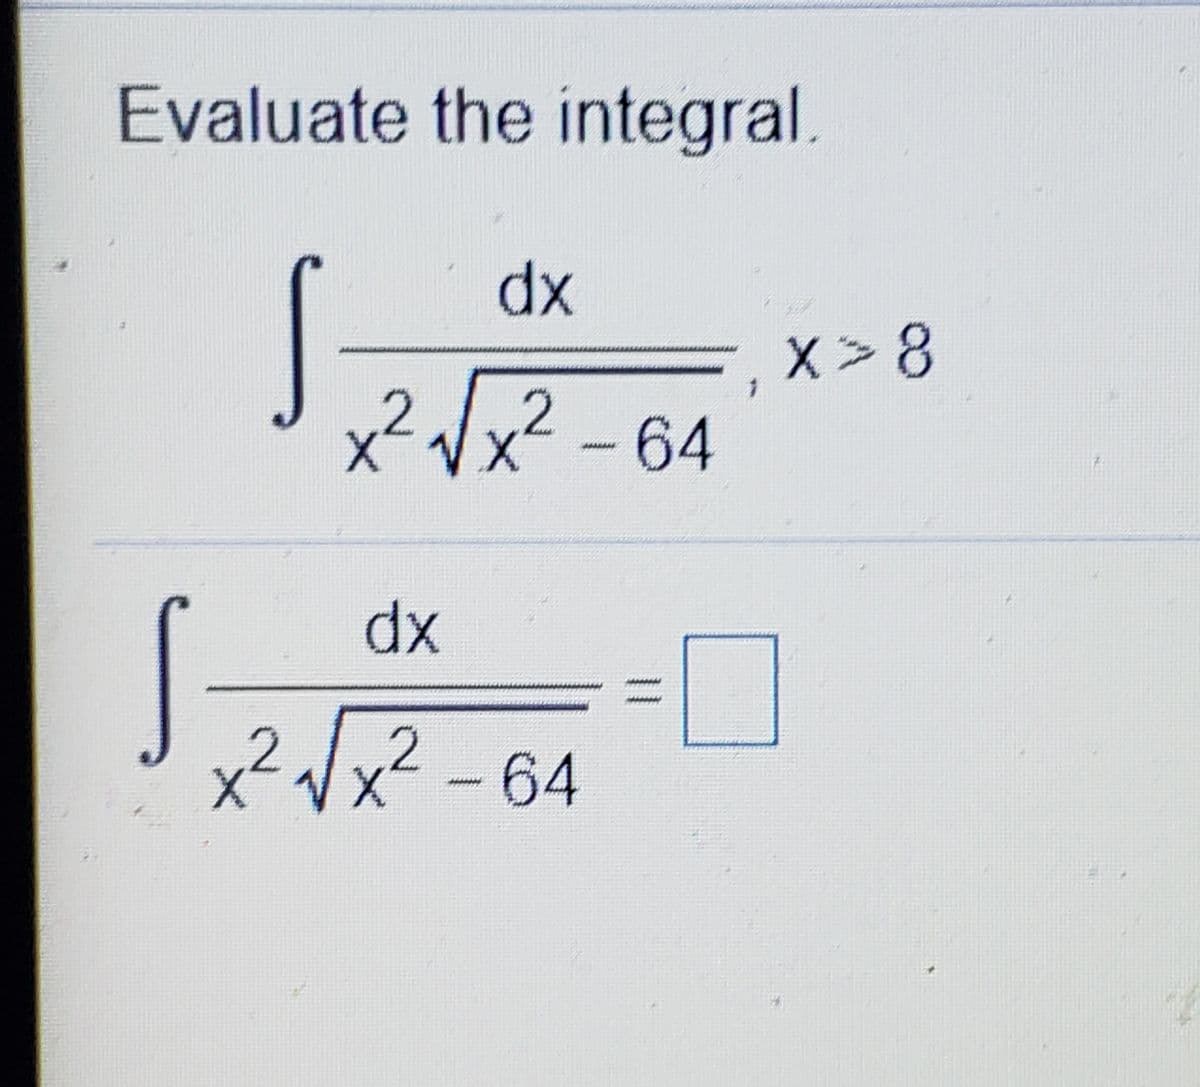 Evaluate the integral
dx
X > 8
x²Vx² - 64
dx
x²Vx²
-64
